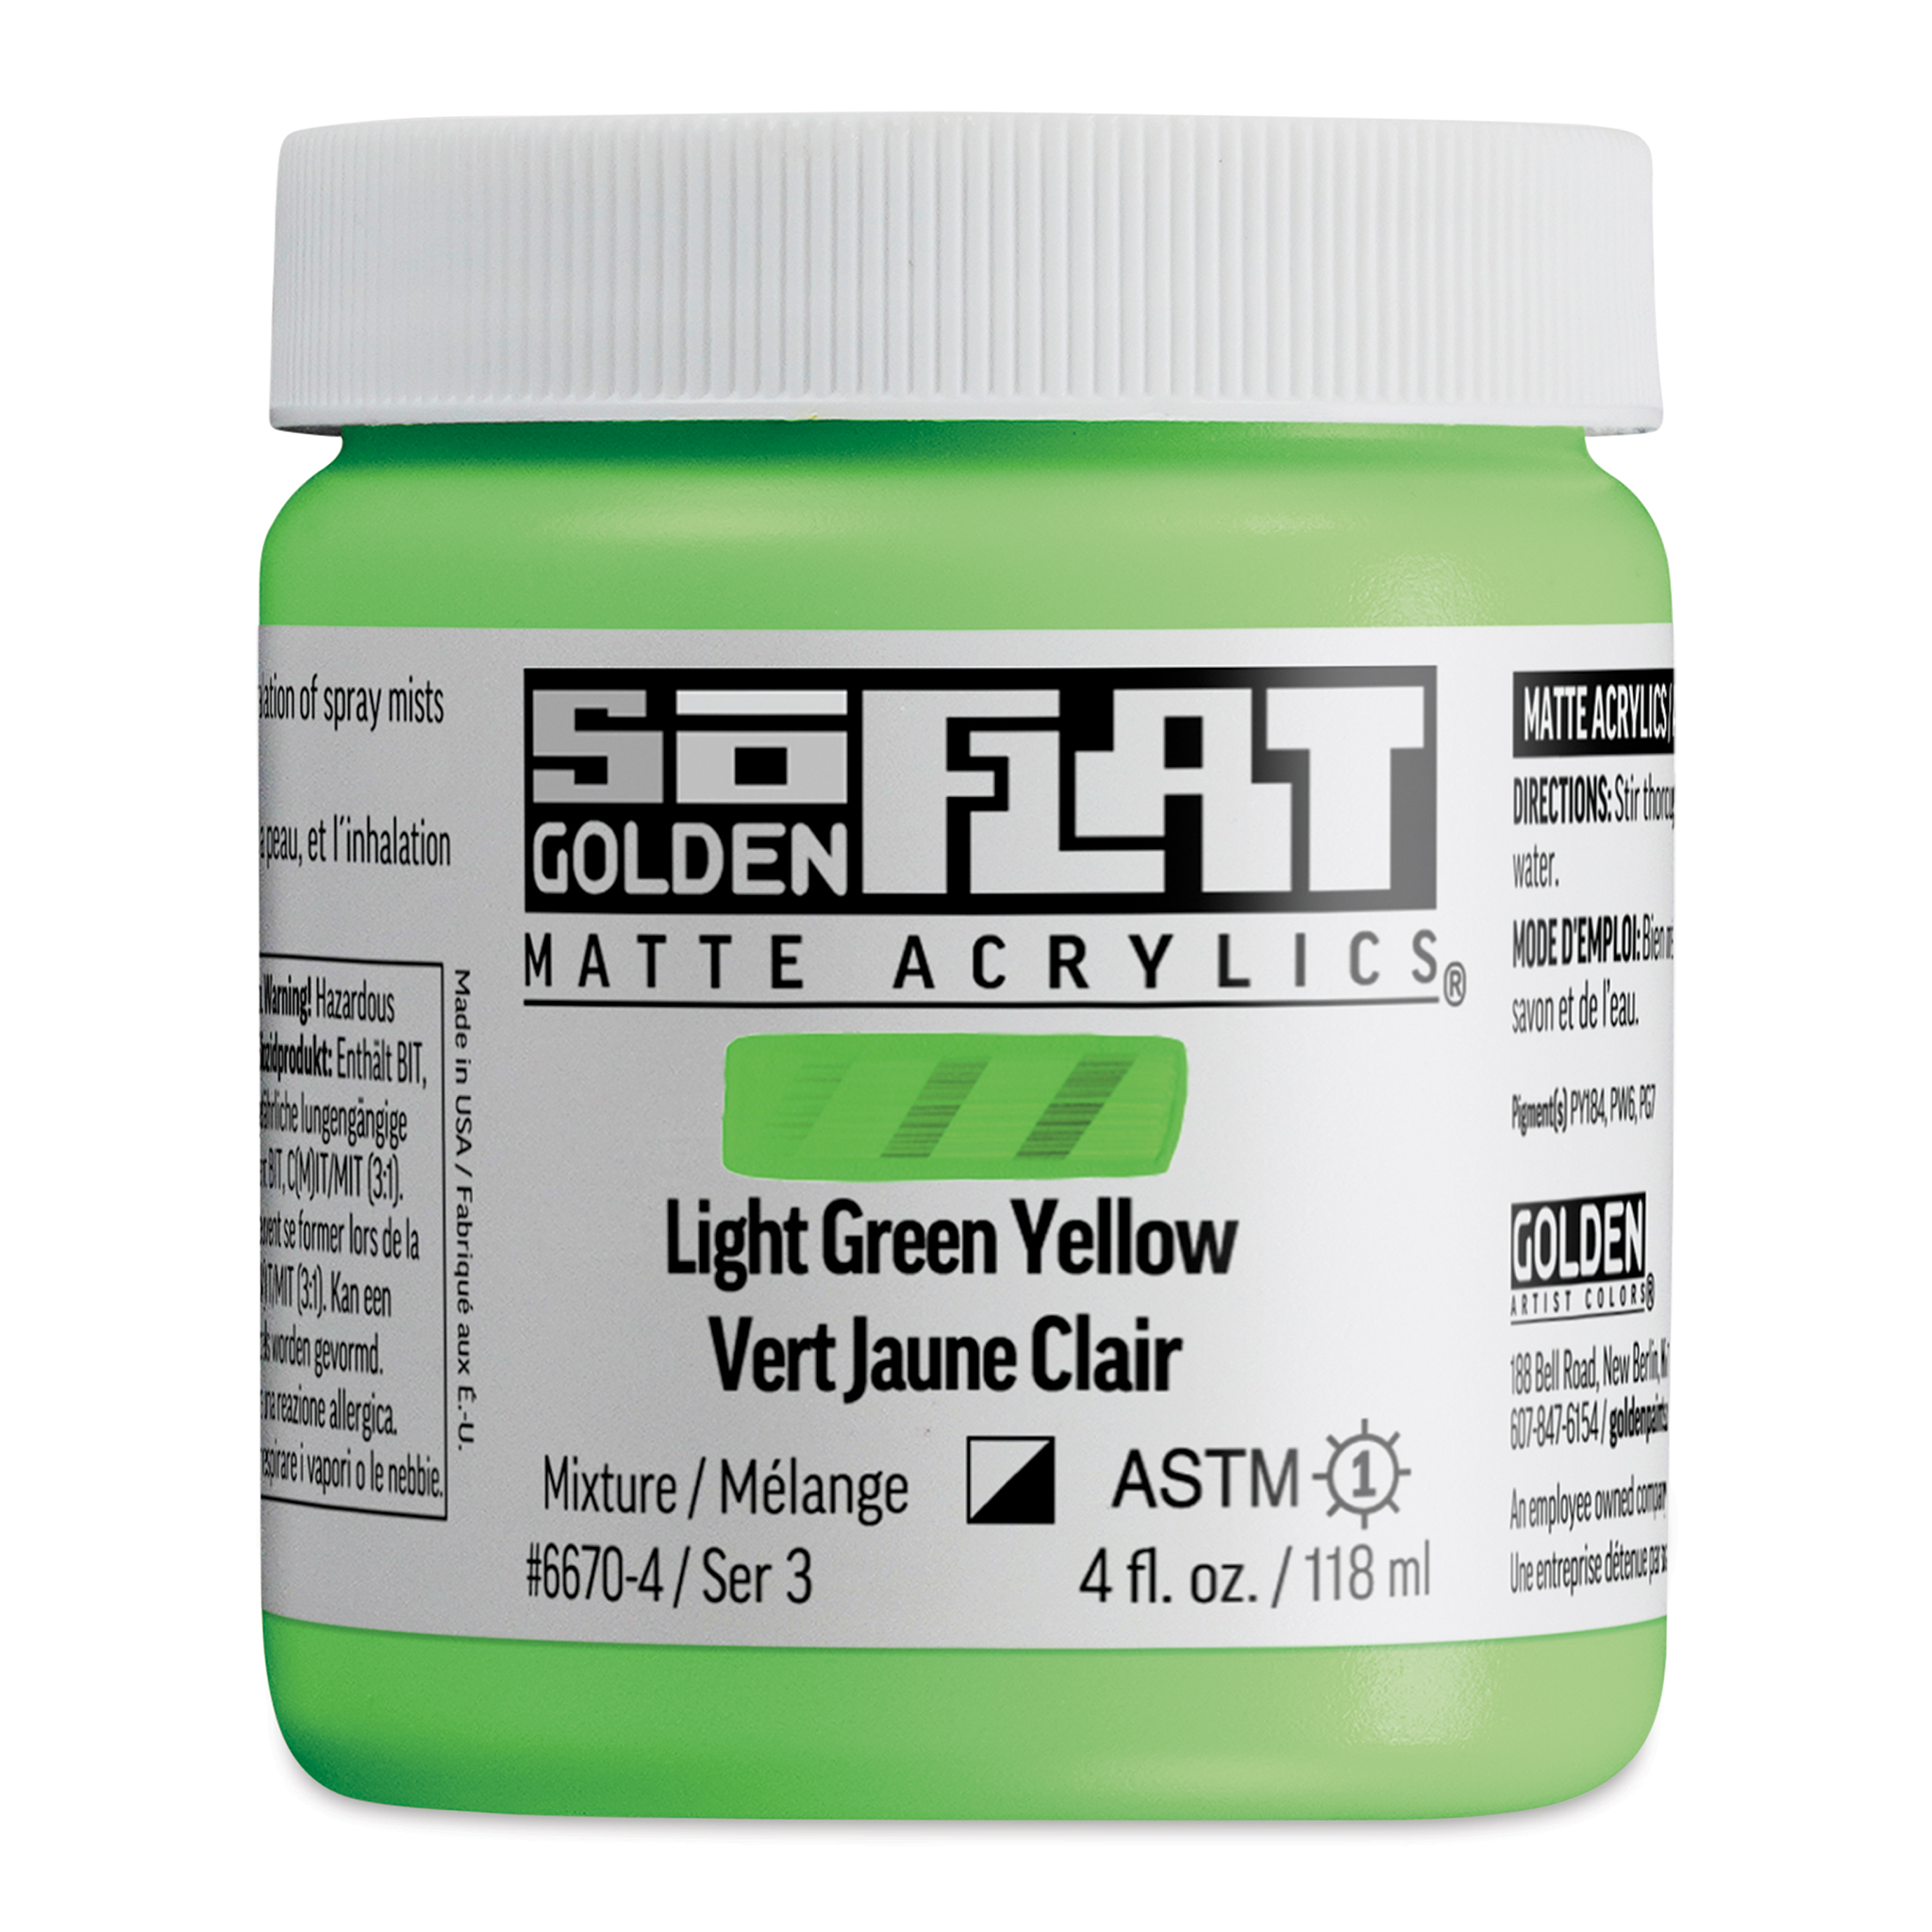 Golden SoFlat Matte Acrylic Paint - Titan Green Pale, 59 ml, Jar